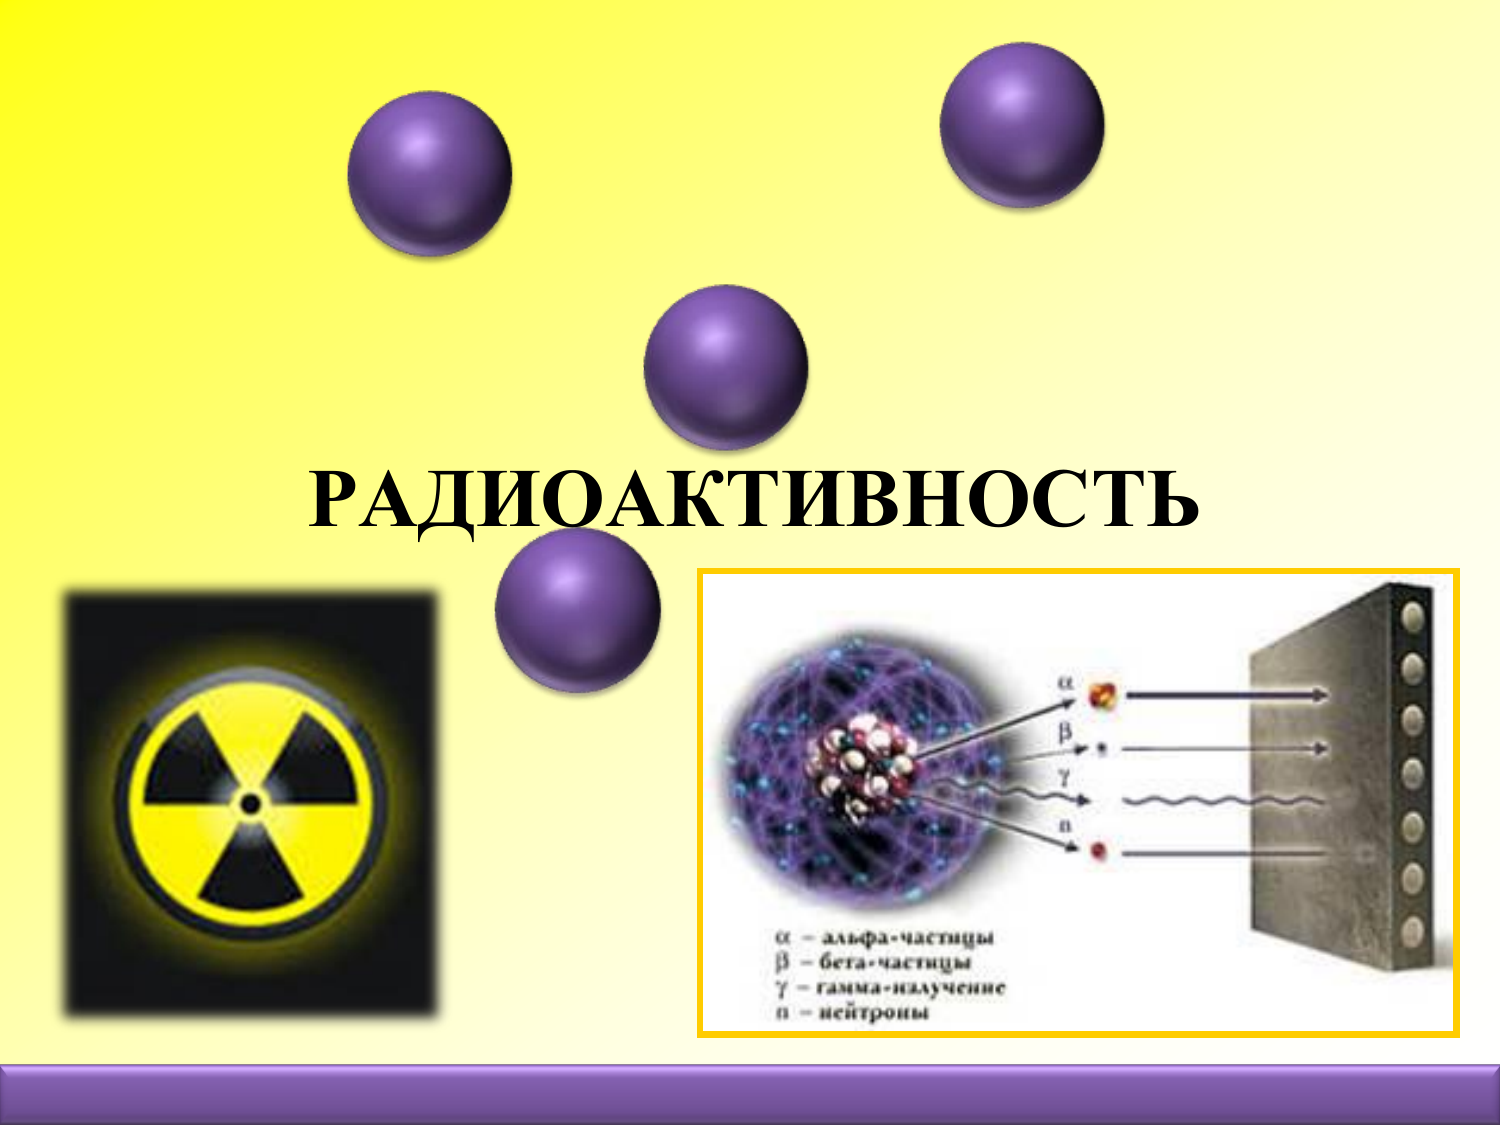 Радиоактивный распад атома. Радиоактивность. Радиоактивность физика. Радиация в физике. Радиоактивное излучение физика.